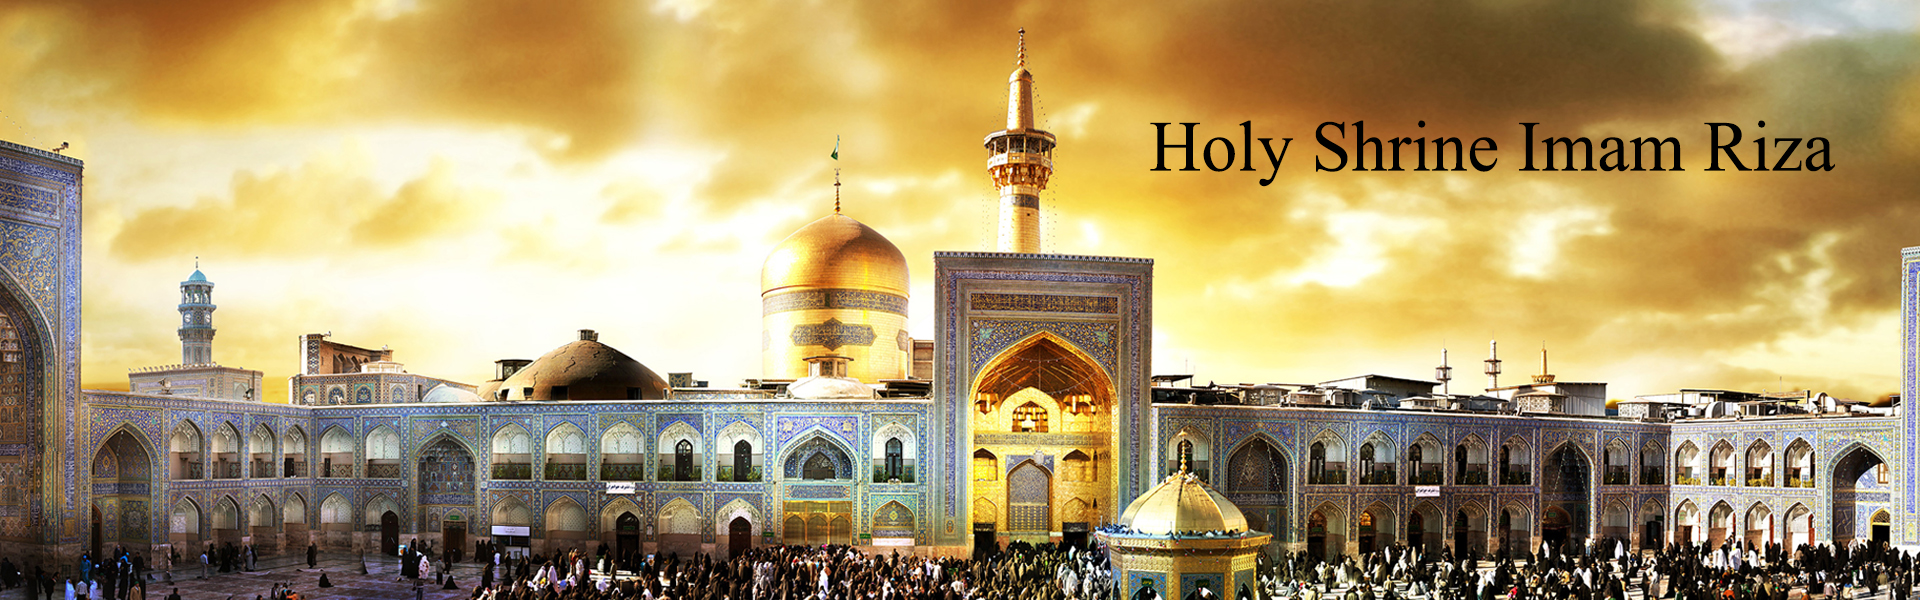 holy-shrine-imam-riza